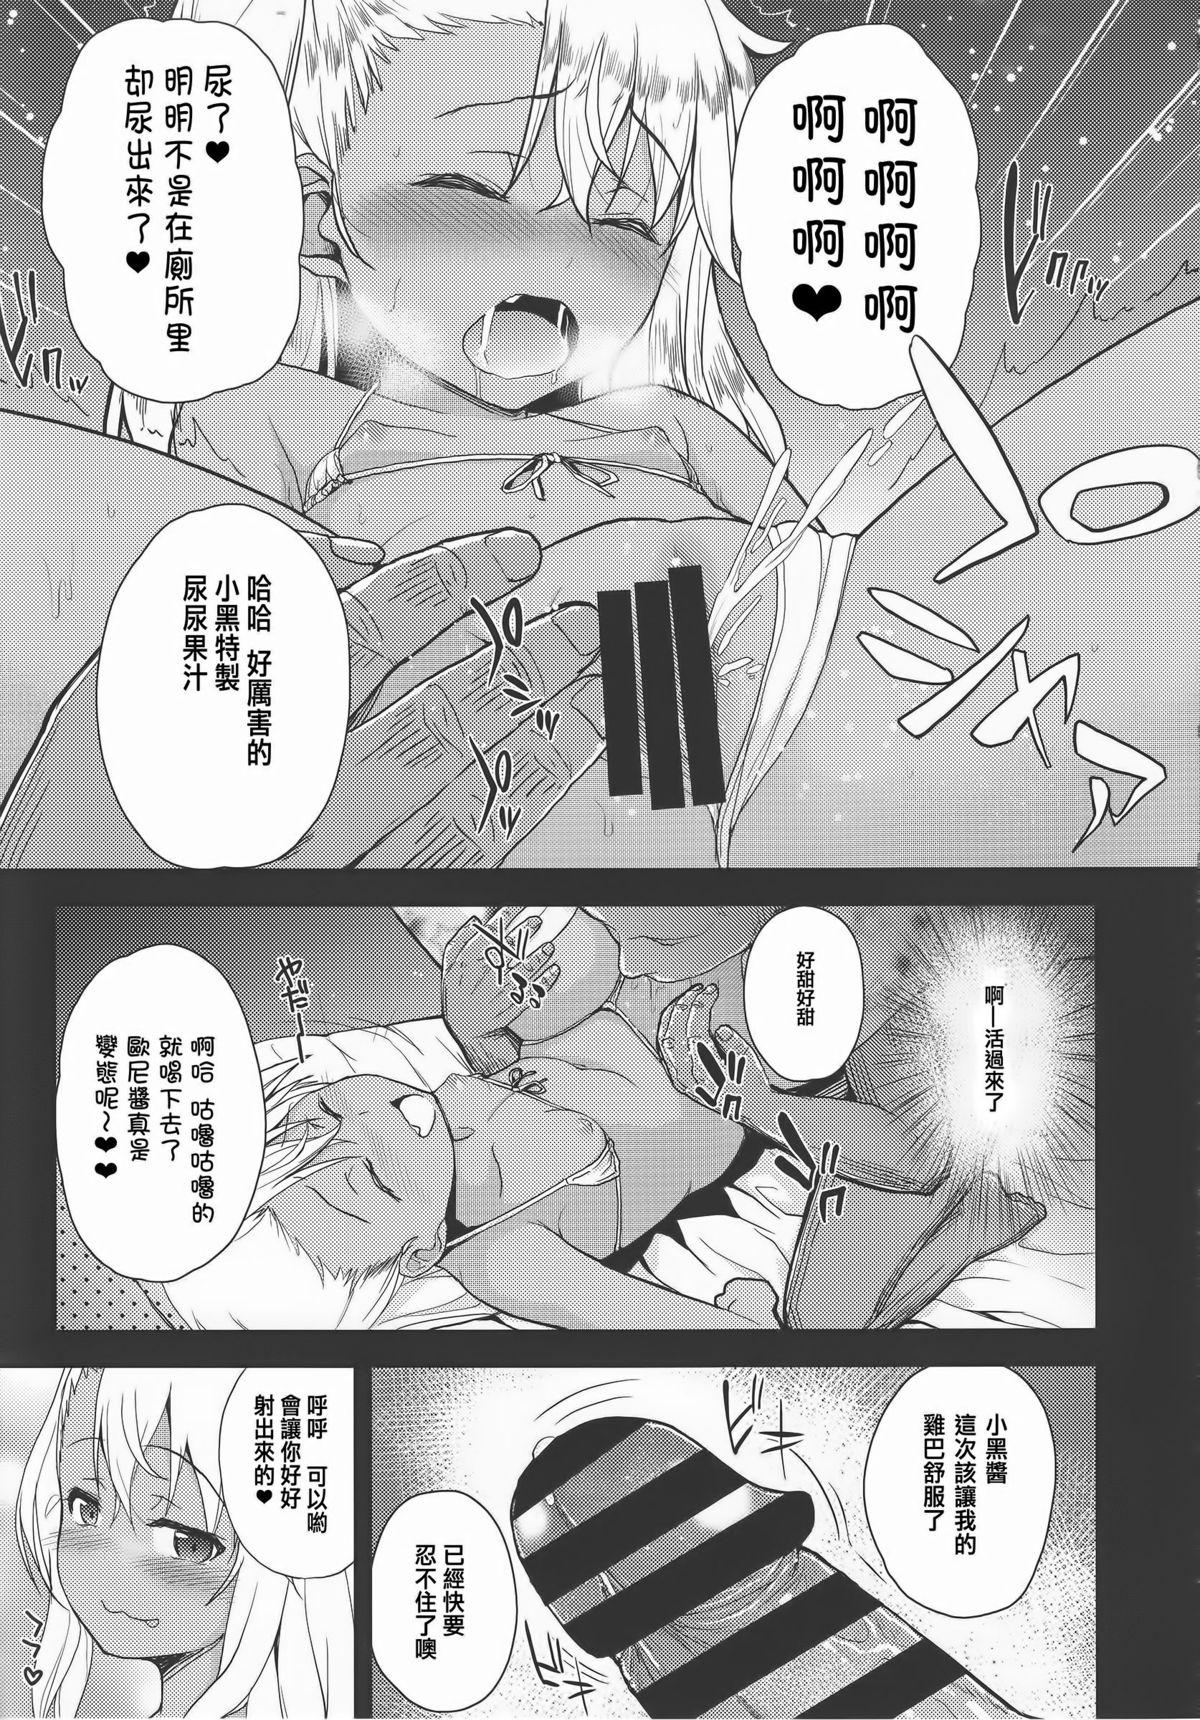 Masterbate Chloe-chan no Iru Omise - Fate kaleid liner prisma illya 8teen - Page 9